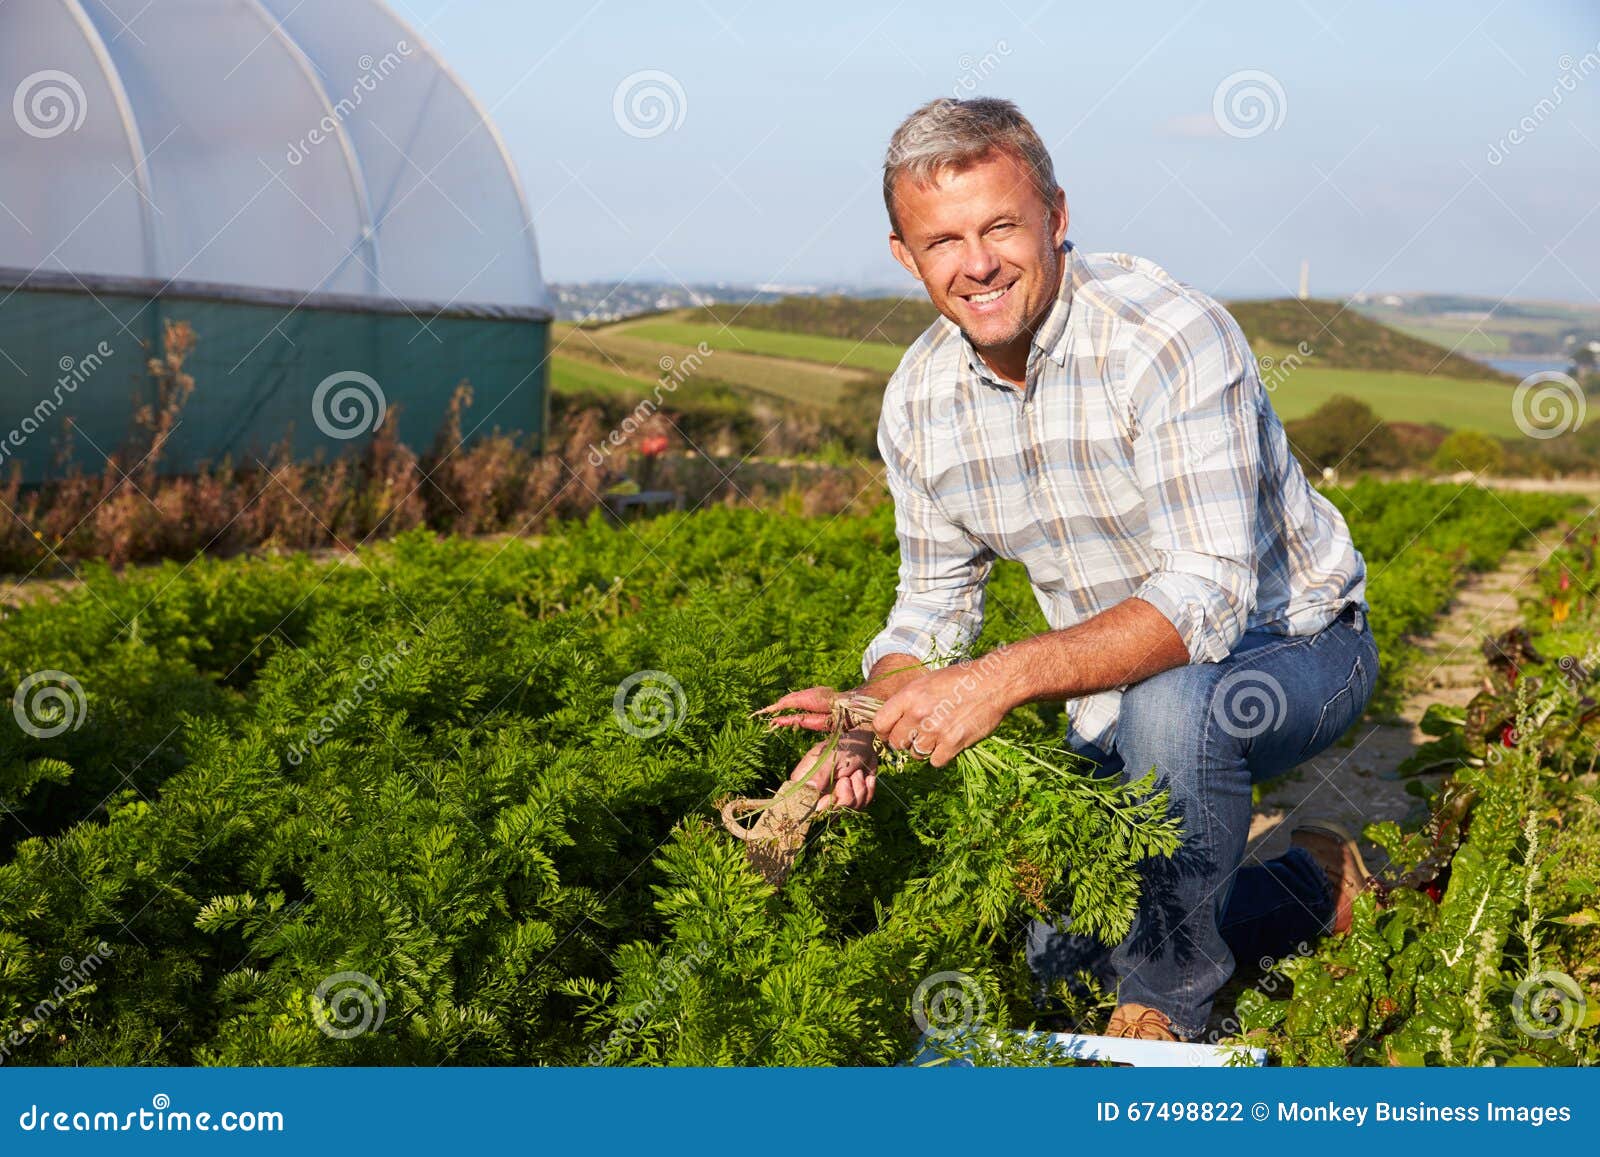 farmer harvesting organic carrot crop on farm